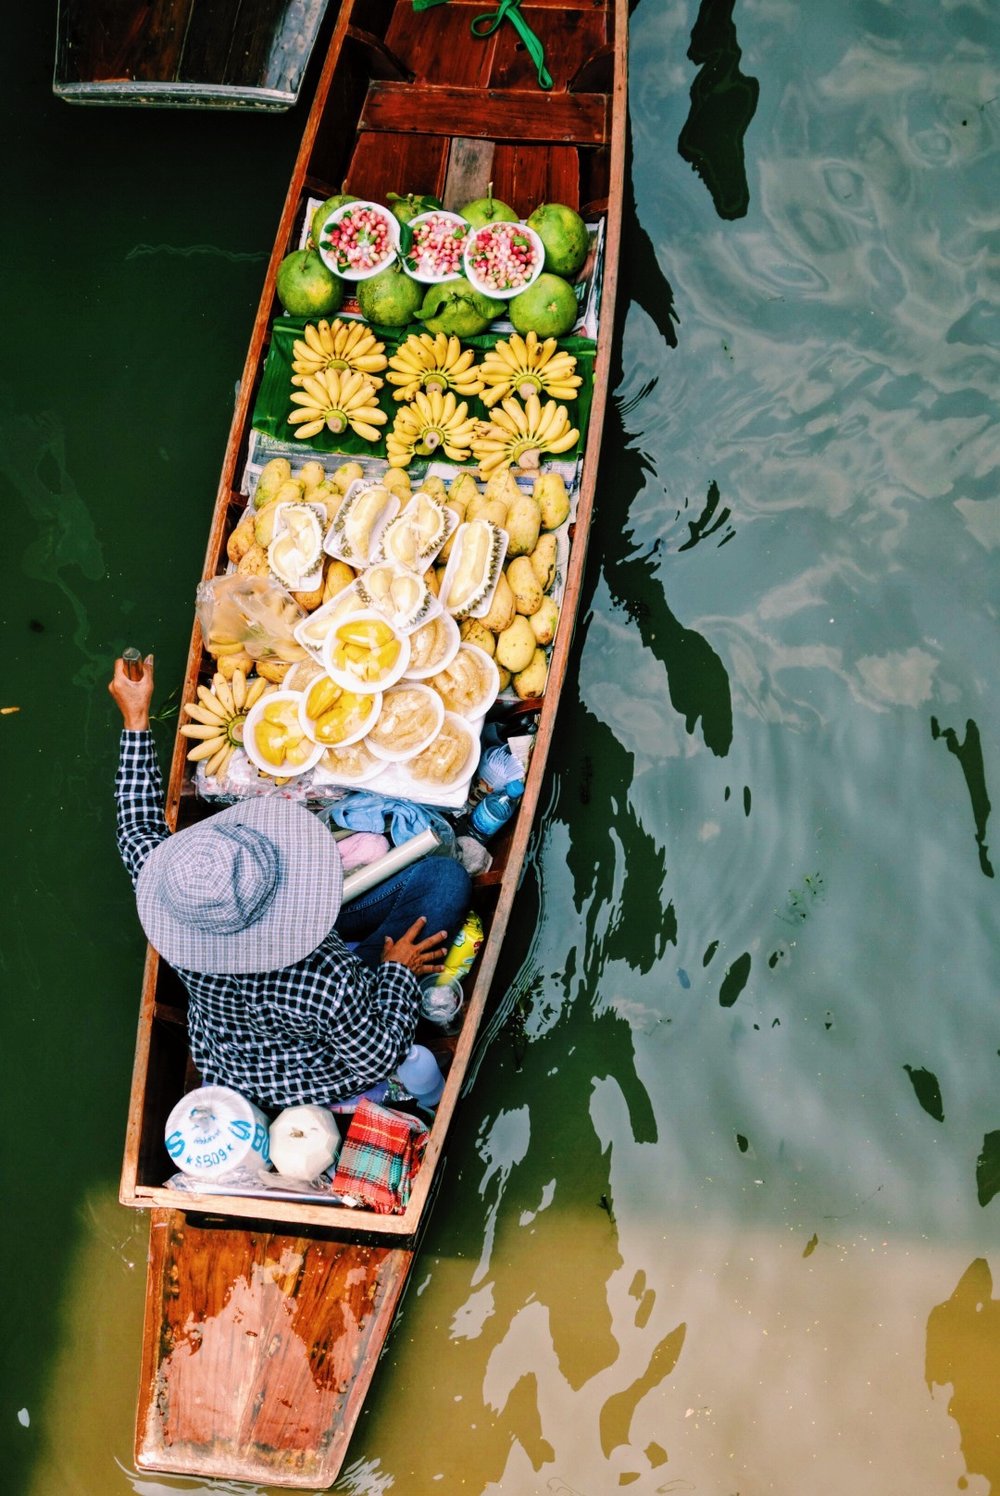 The Damnoen Saduak Floating Market